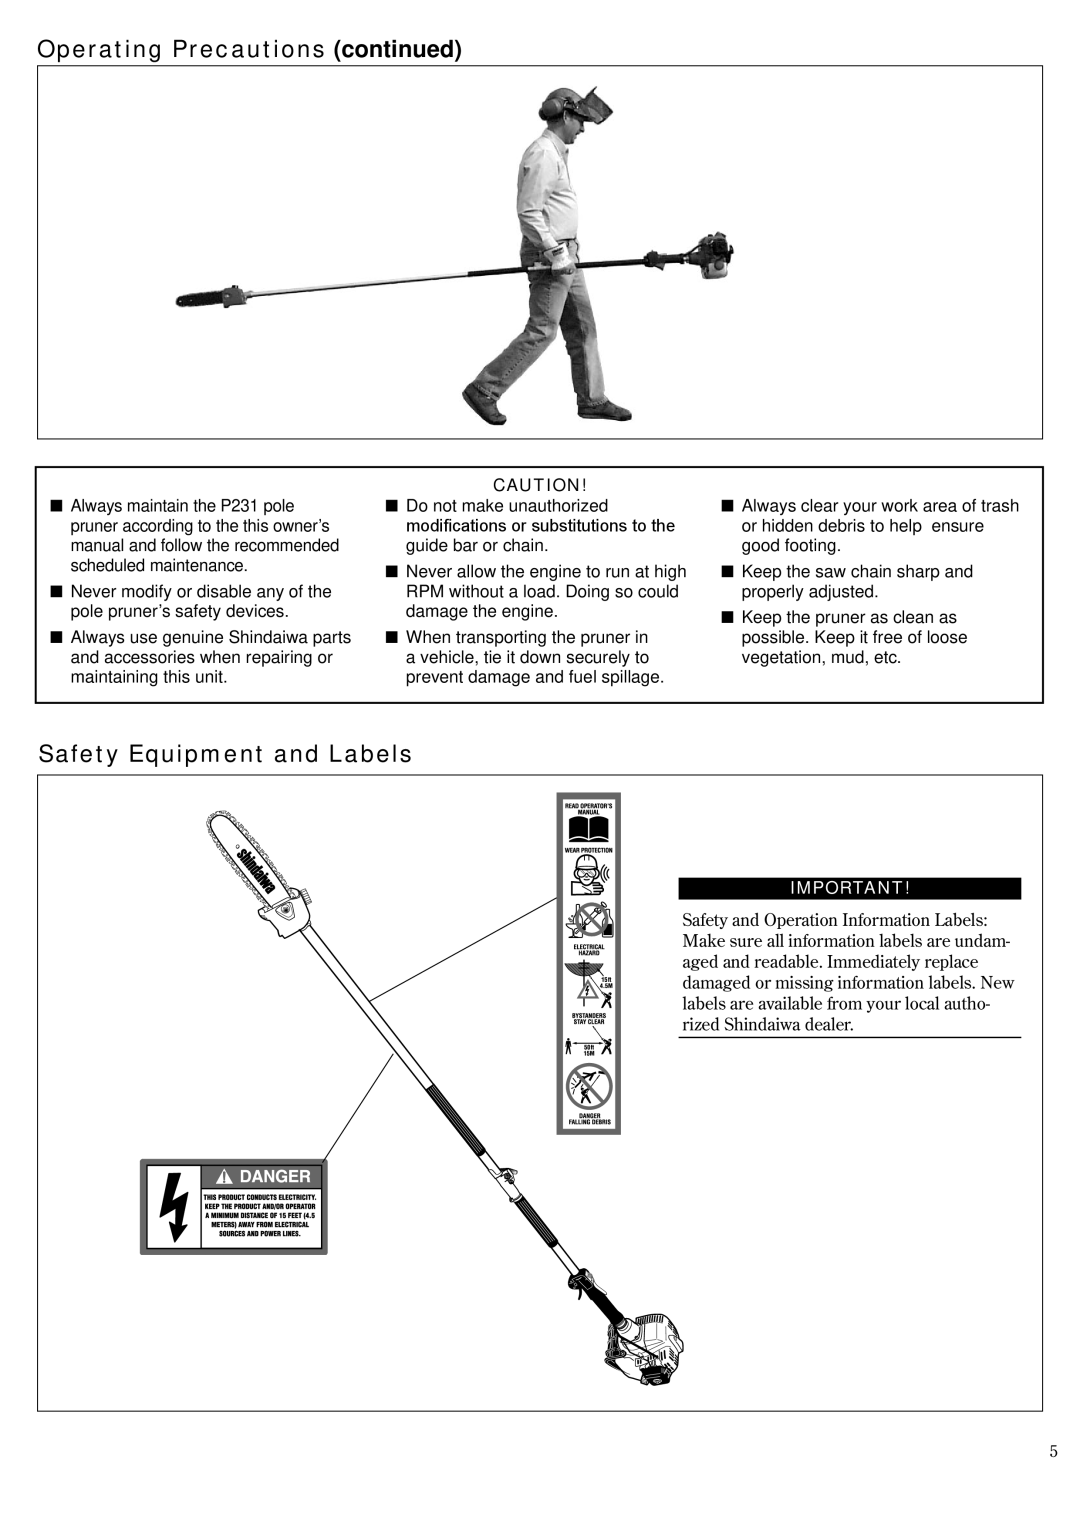 Shindaiwa 62891-94311 manual Operating Precautions continued, Safety Equipment and Labels 